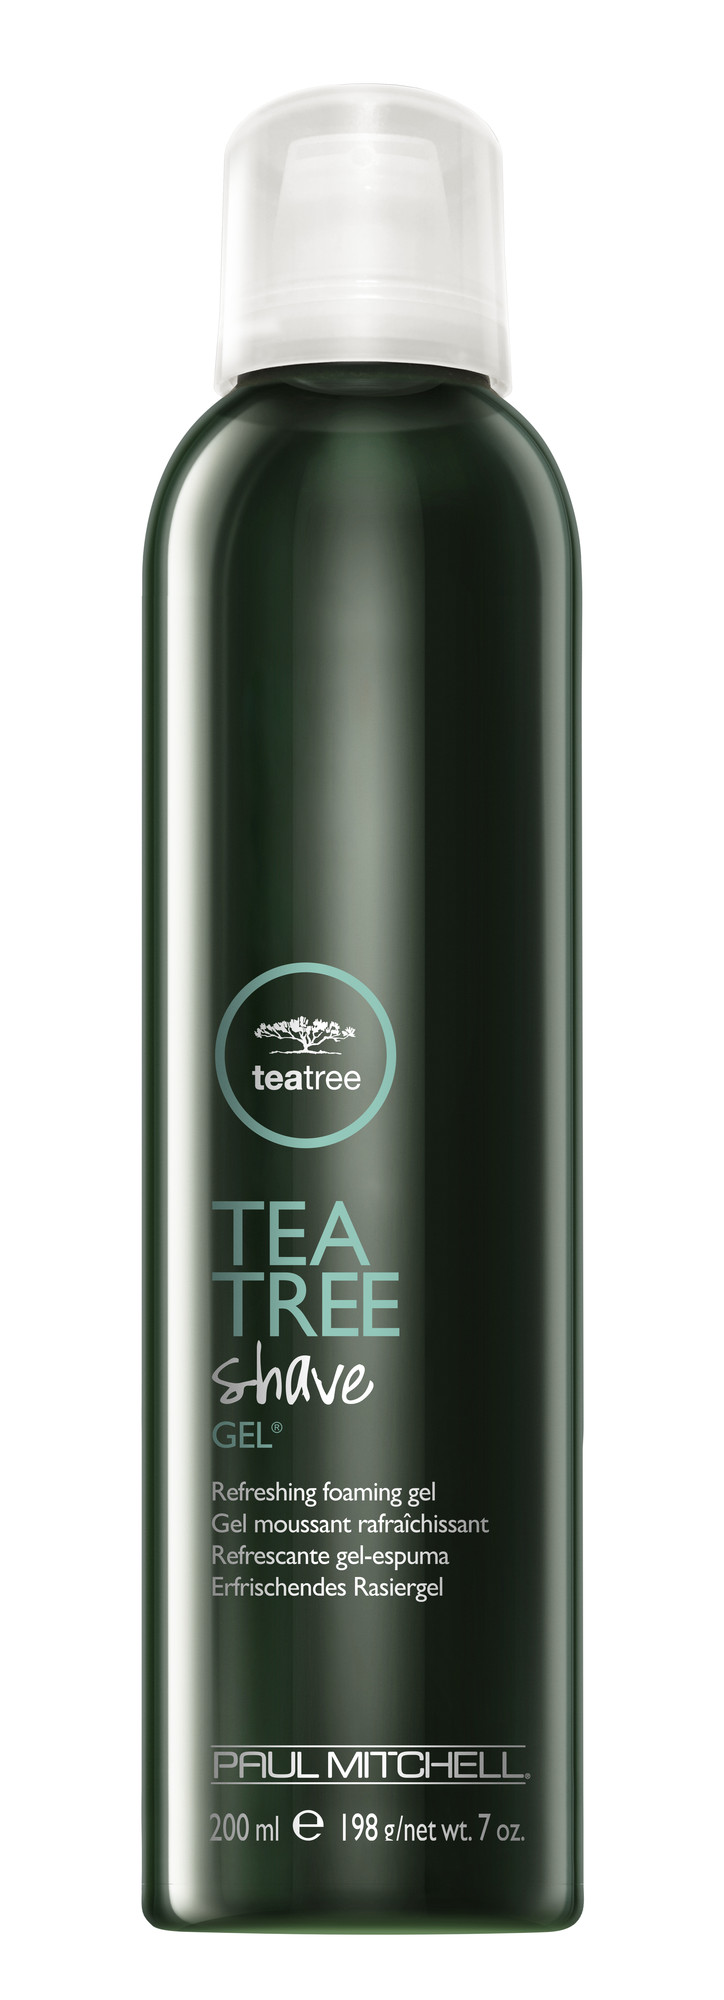 Tea Tree Shave Gel®